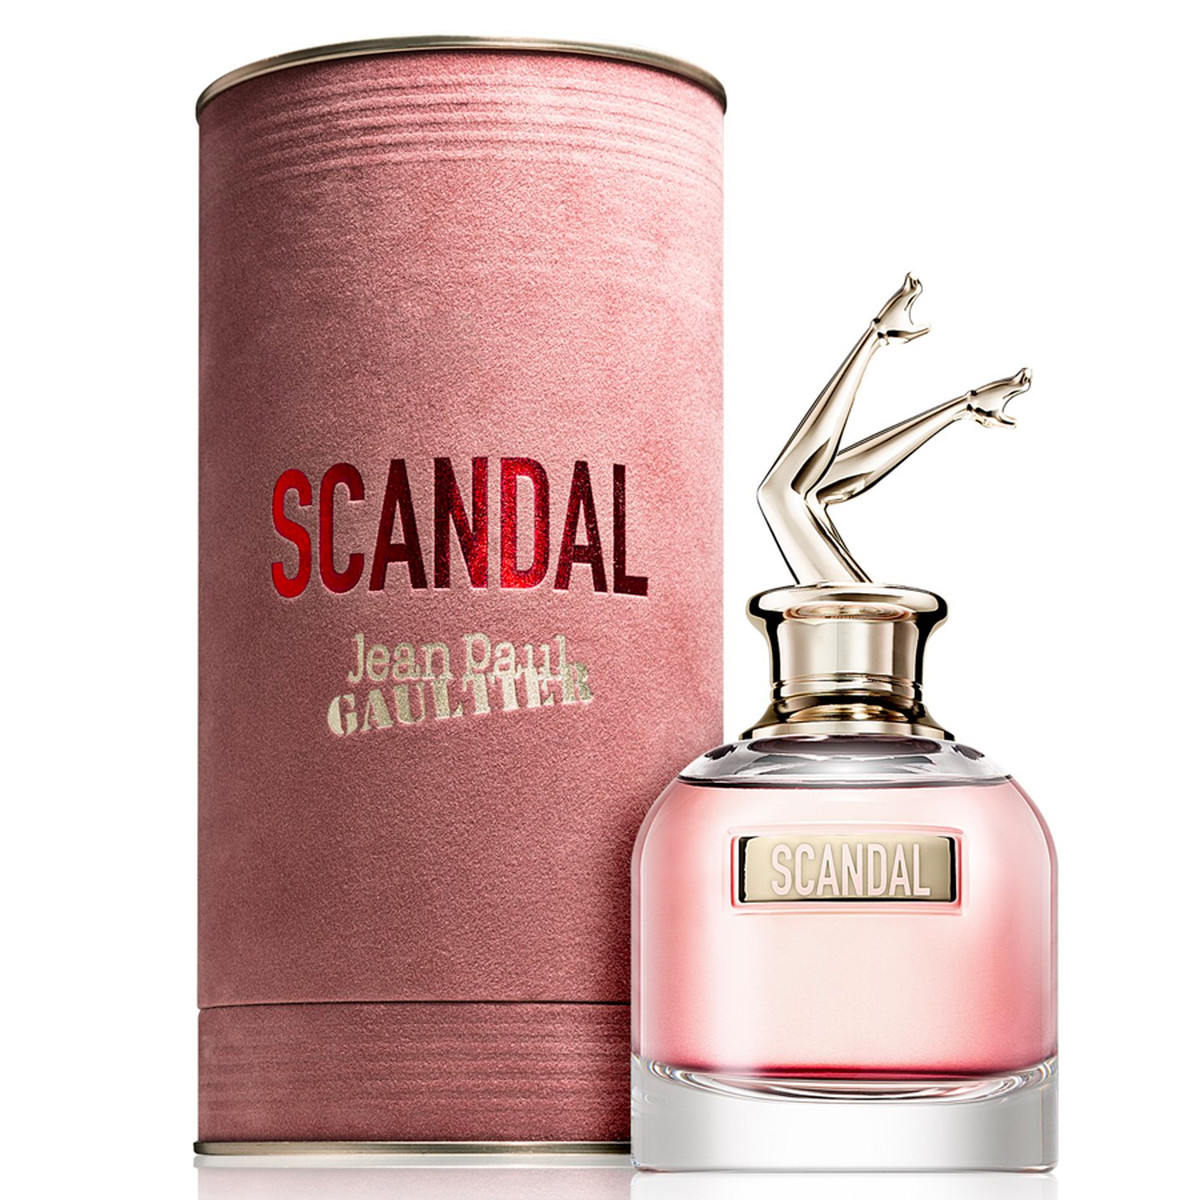 JEAN PAUL GAULTIER Scandal eau de parfum Vaporizador - 80ml